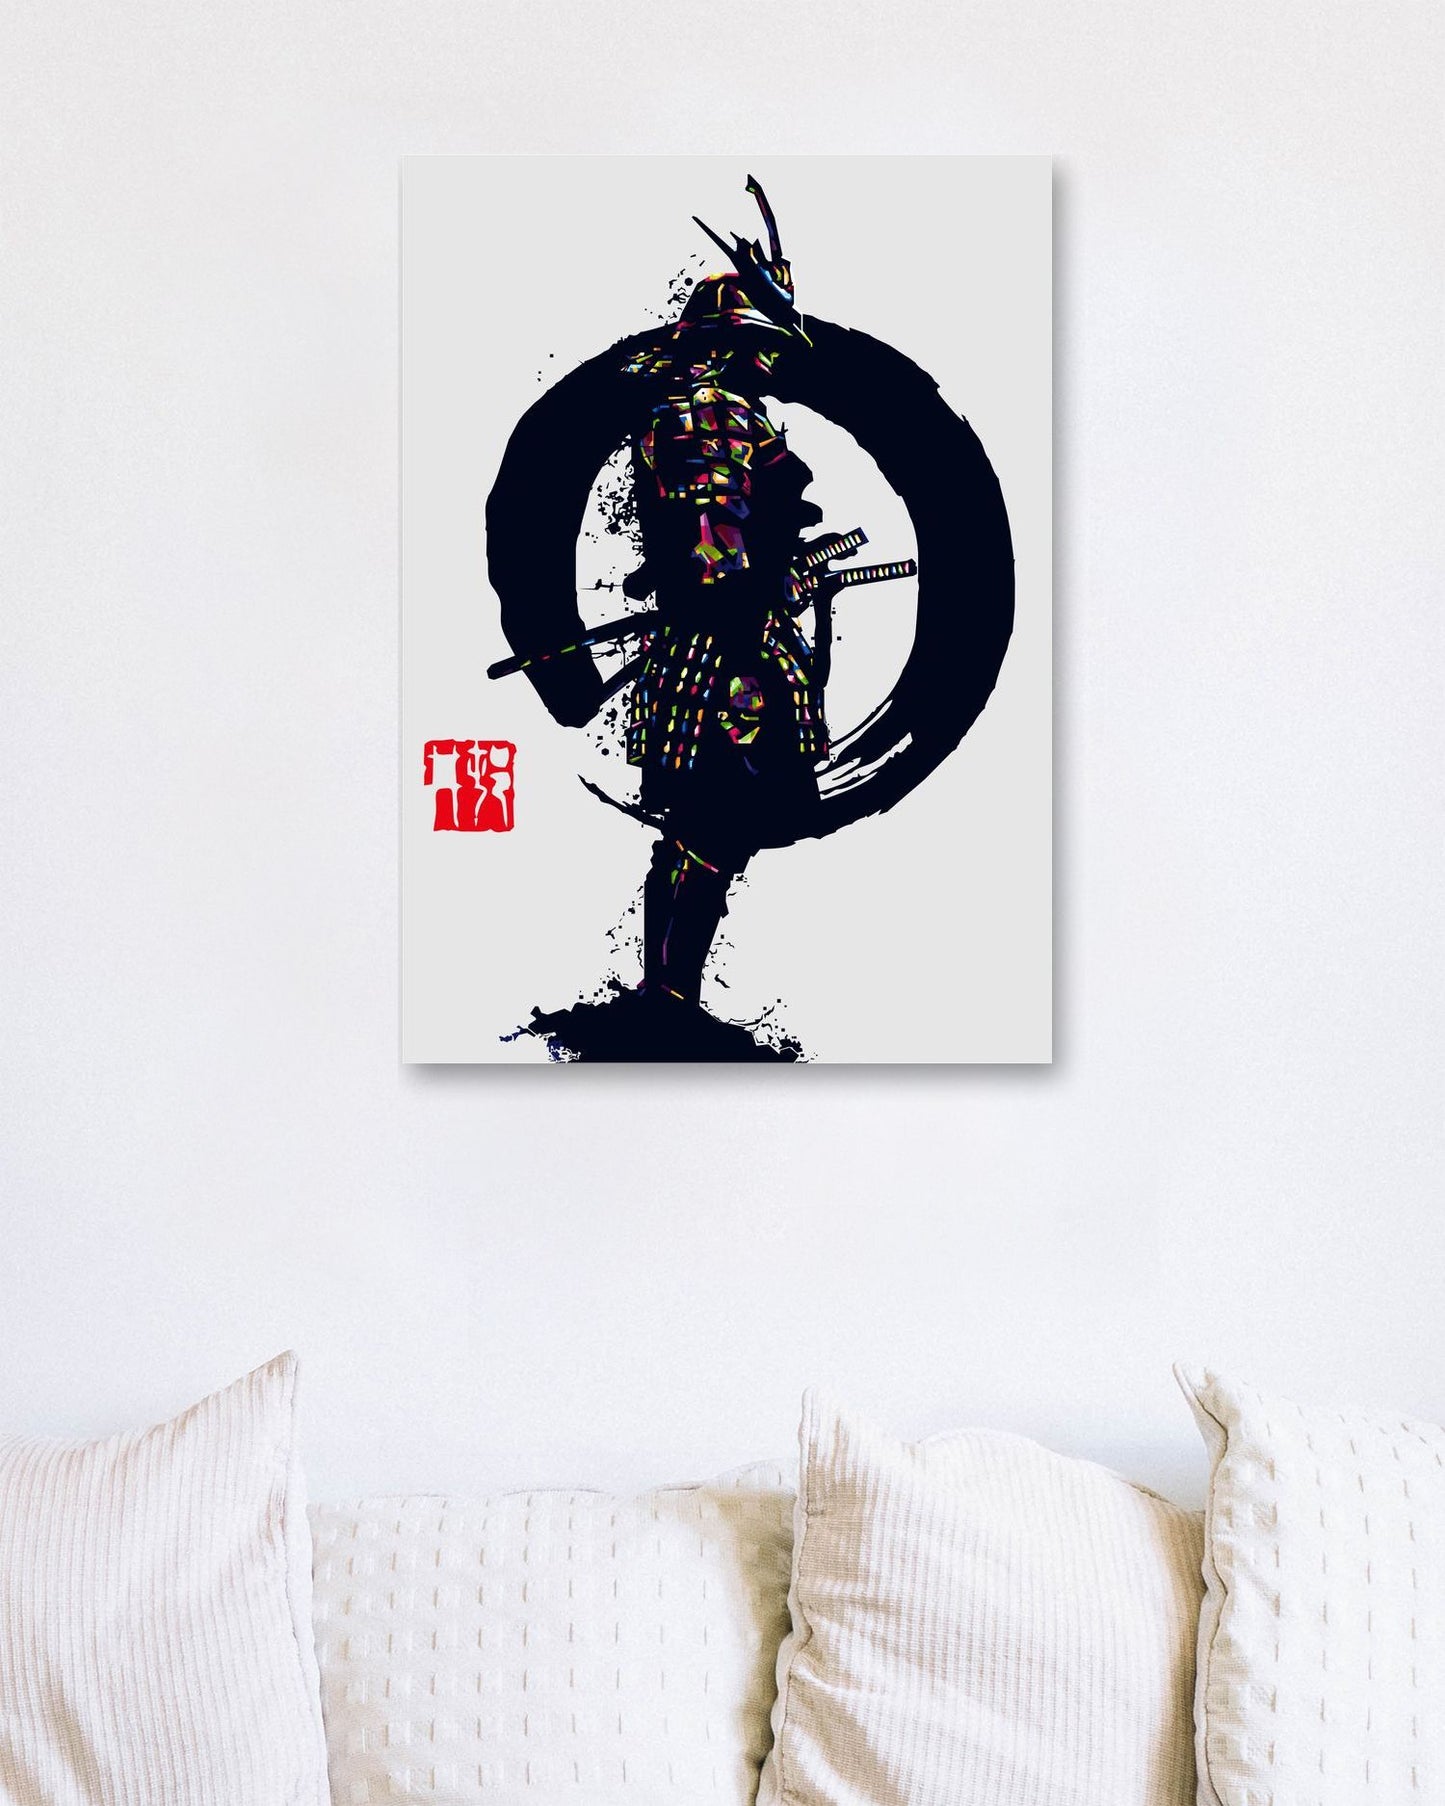 Samurai Pop art - @MKSTUDIO